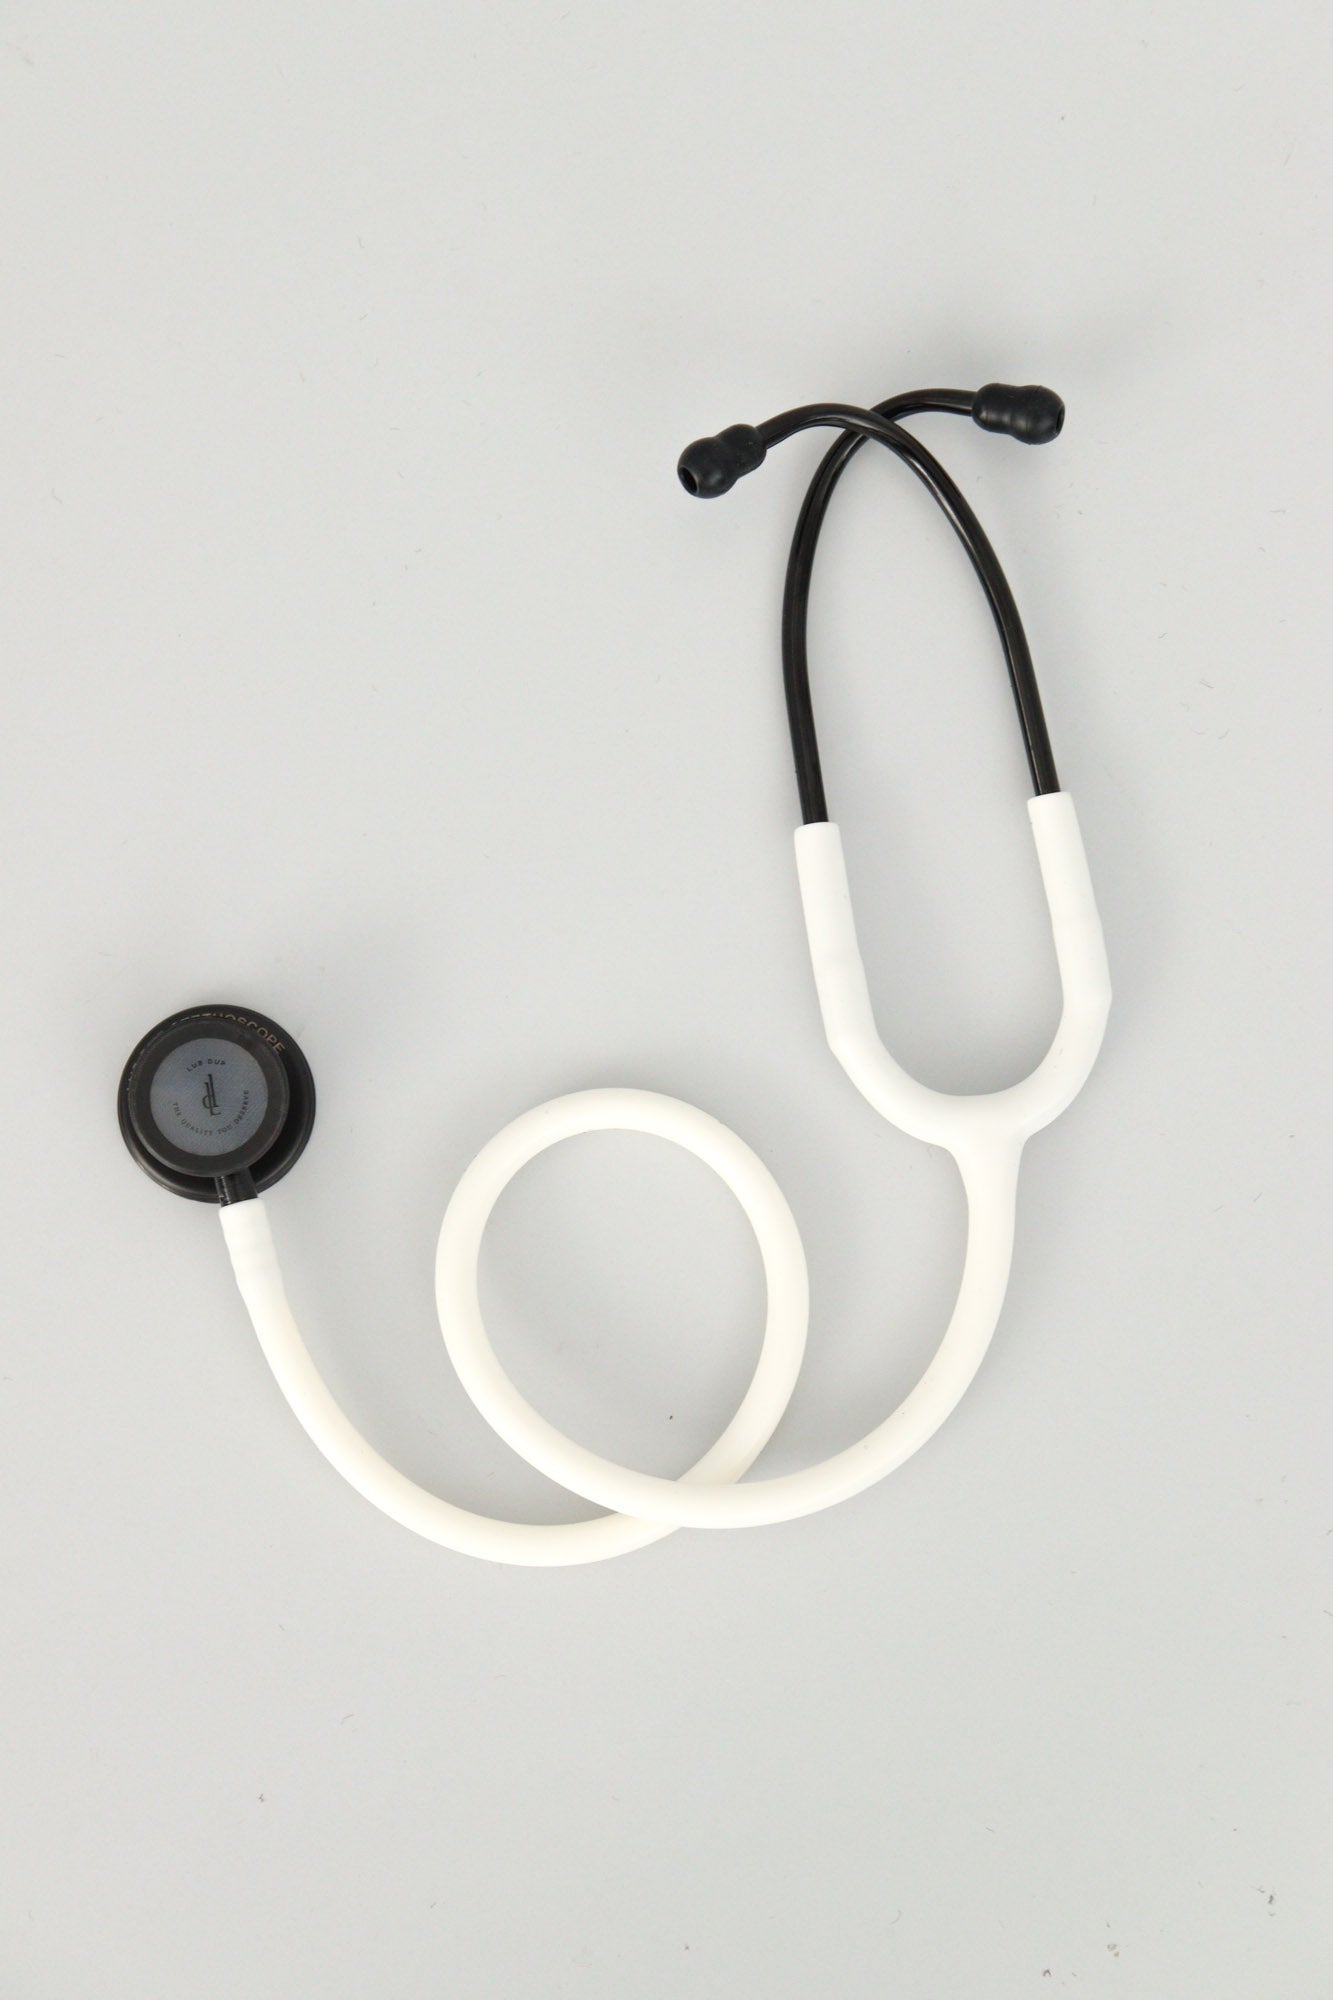 Lub Dup Adult Stethoscope - White-Black Edition